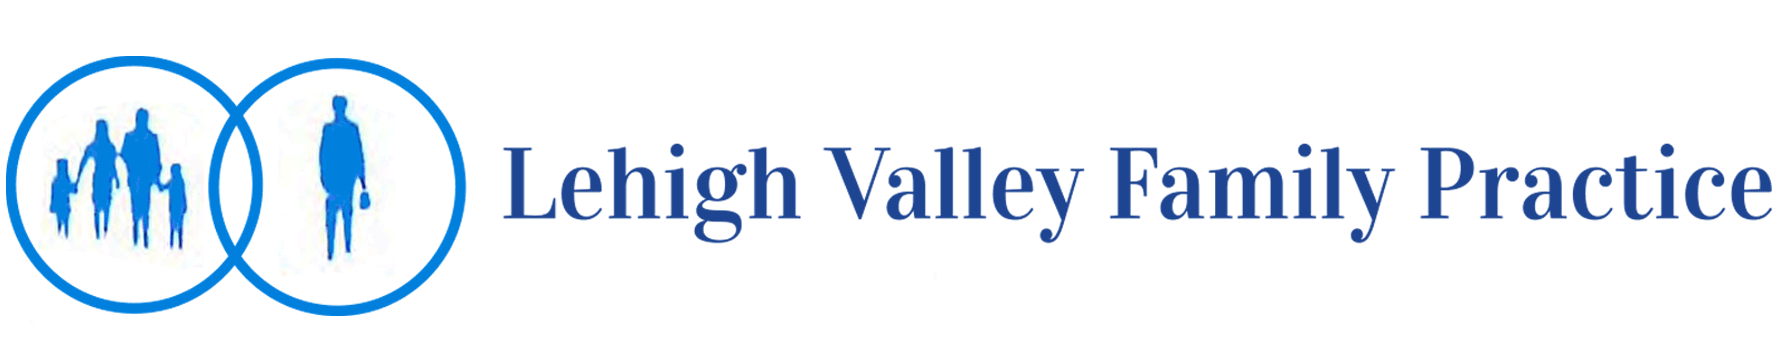 Lehigh Valley Family Practice